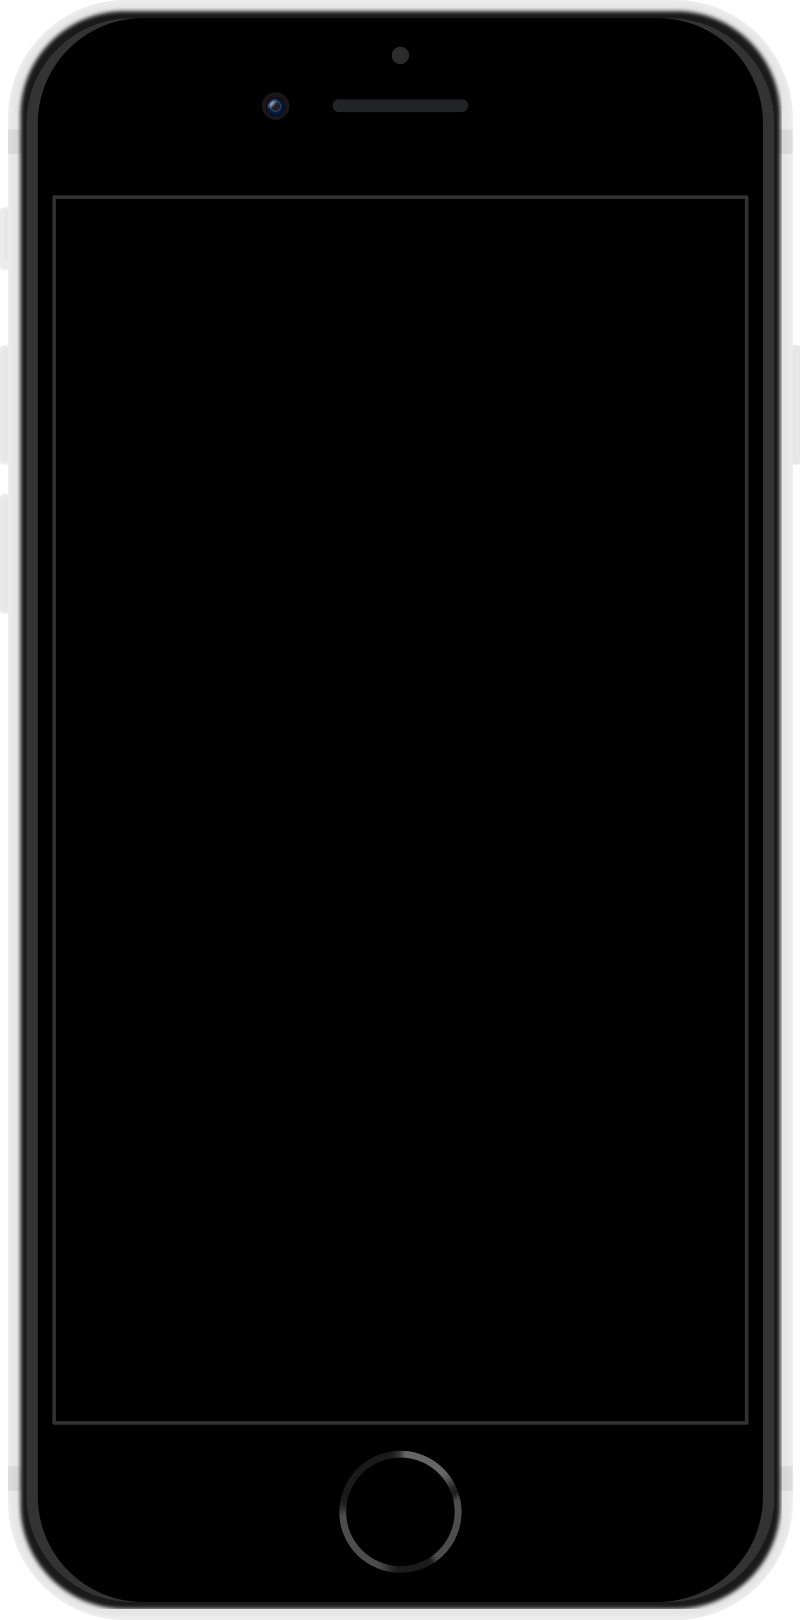 iPhone SE (3. Generation) – Wikipedia